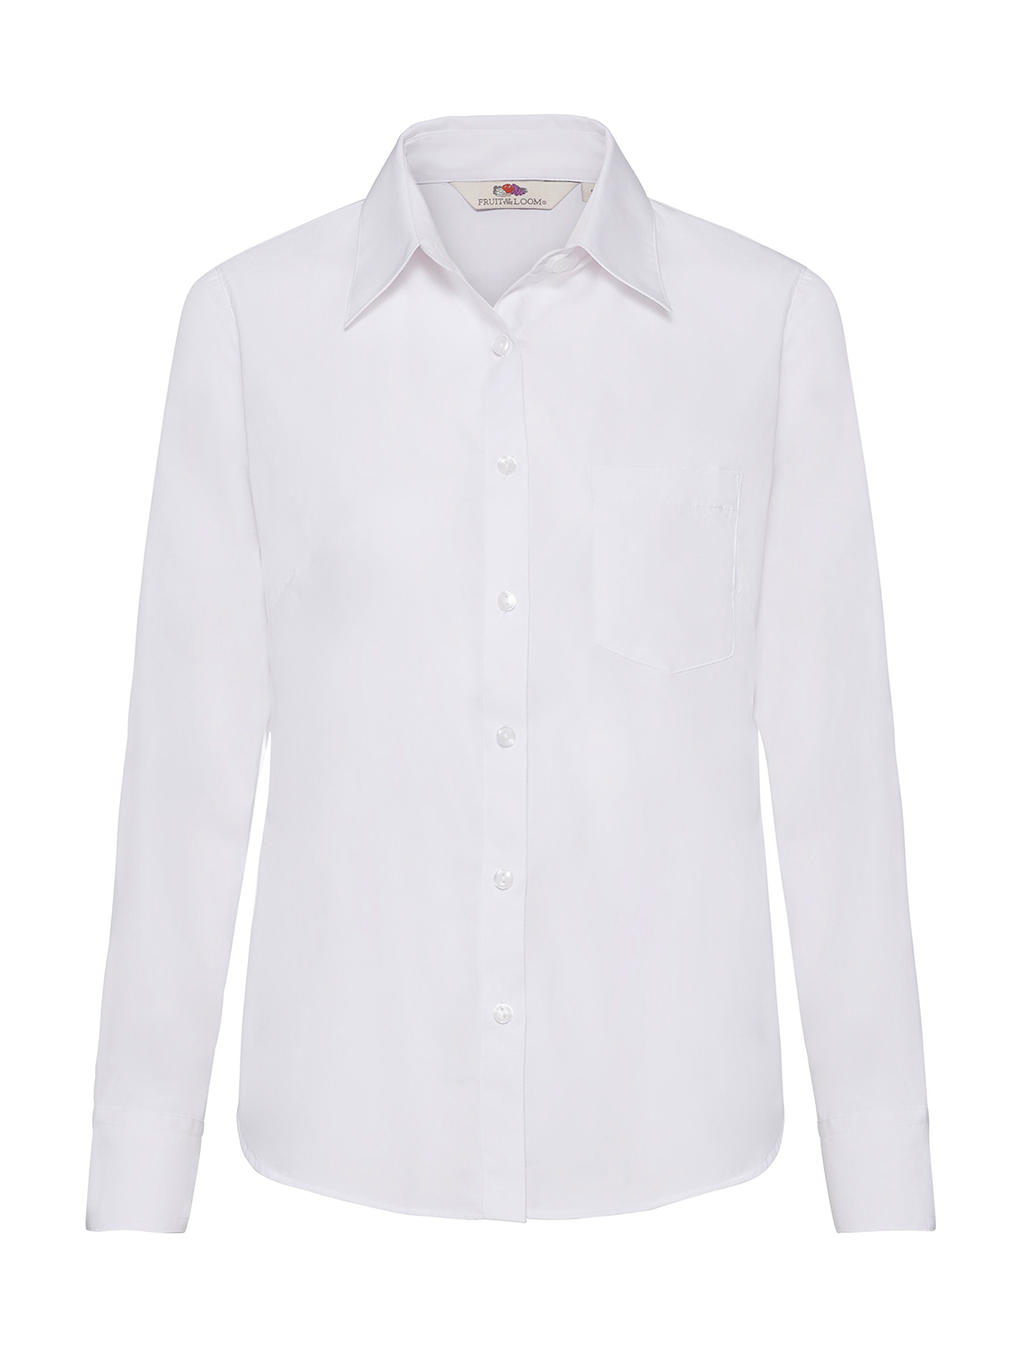  Ladies Poplin Shirt LS in Farbe White